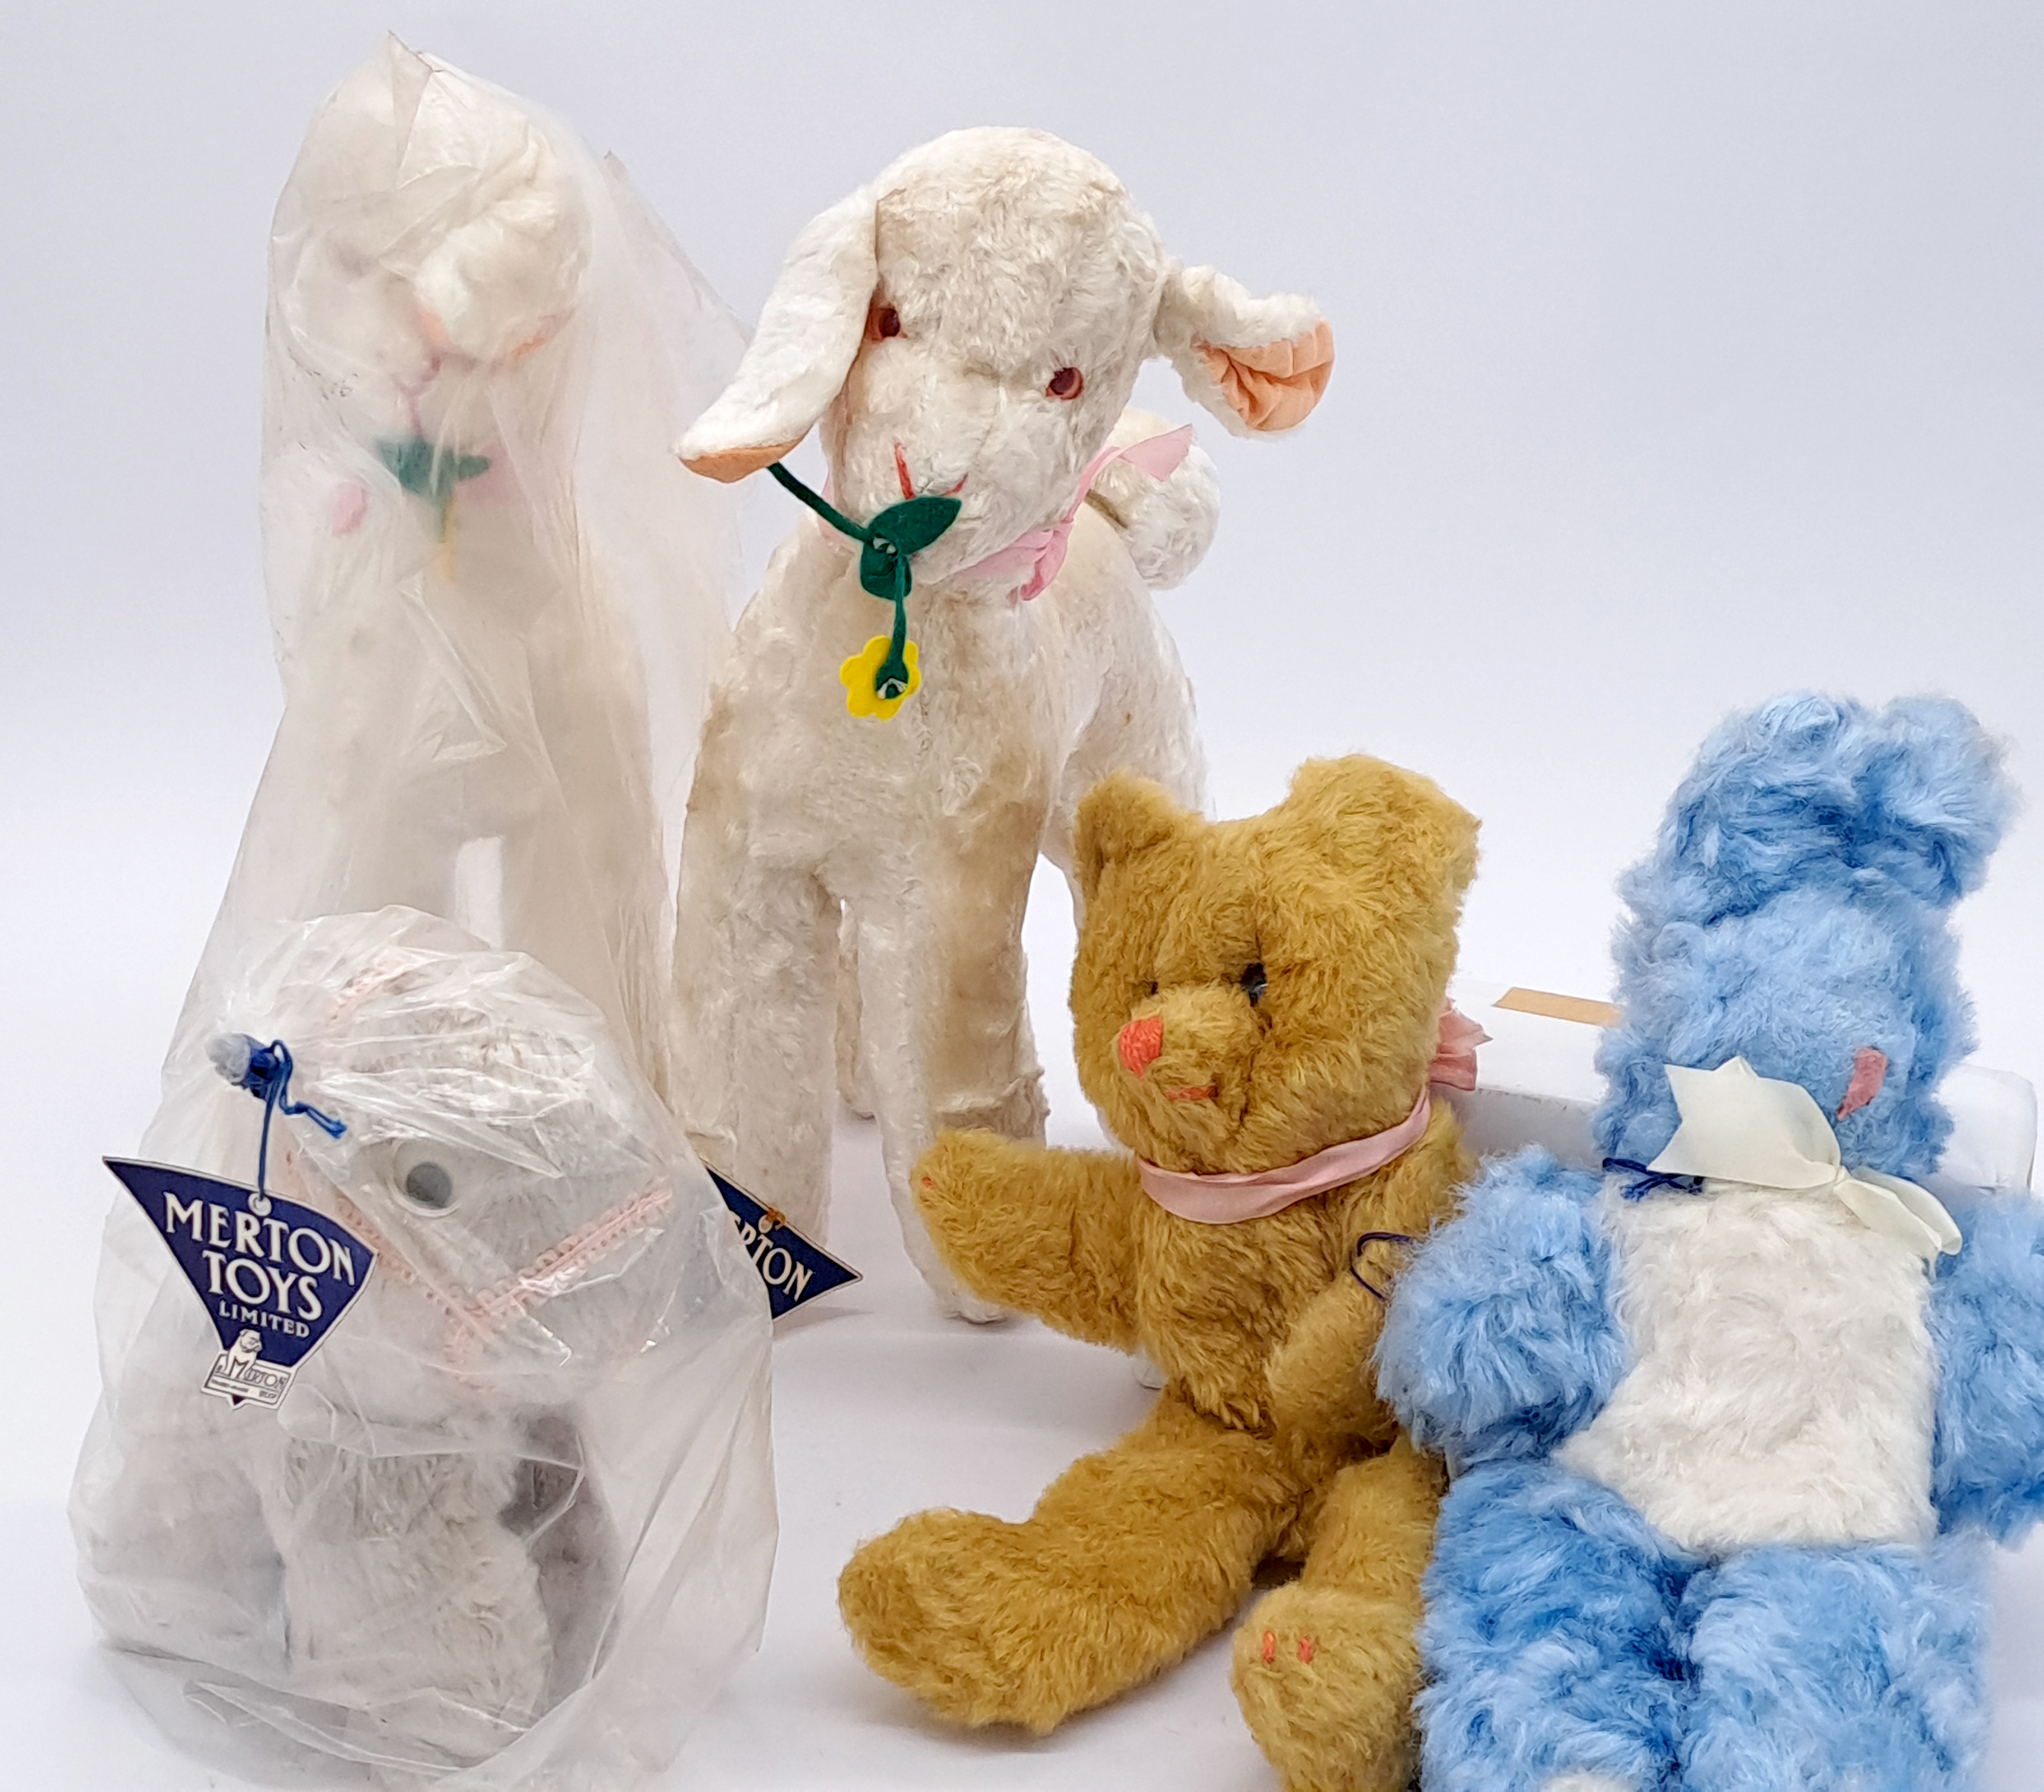 Merton Toys group of teddy bears/animals